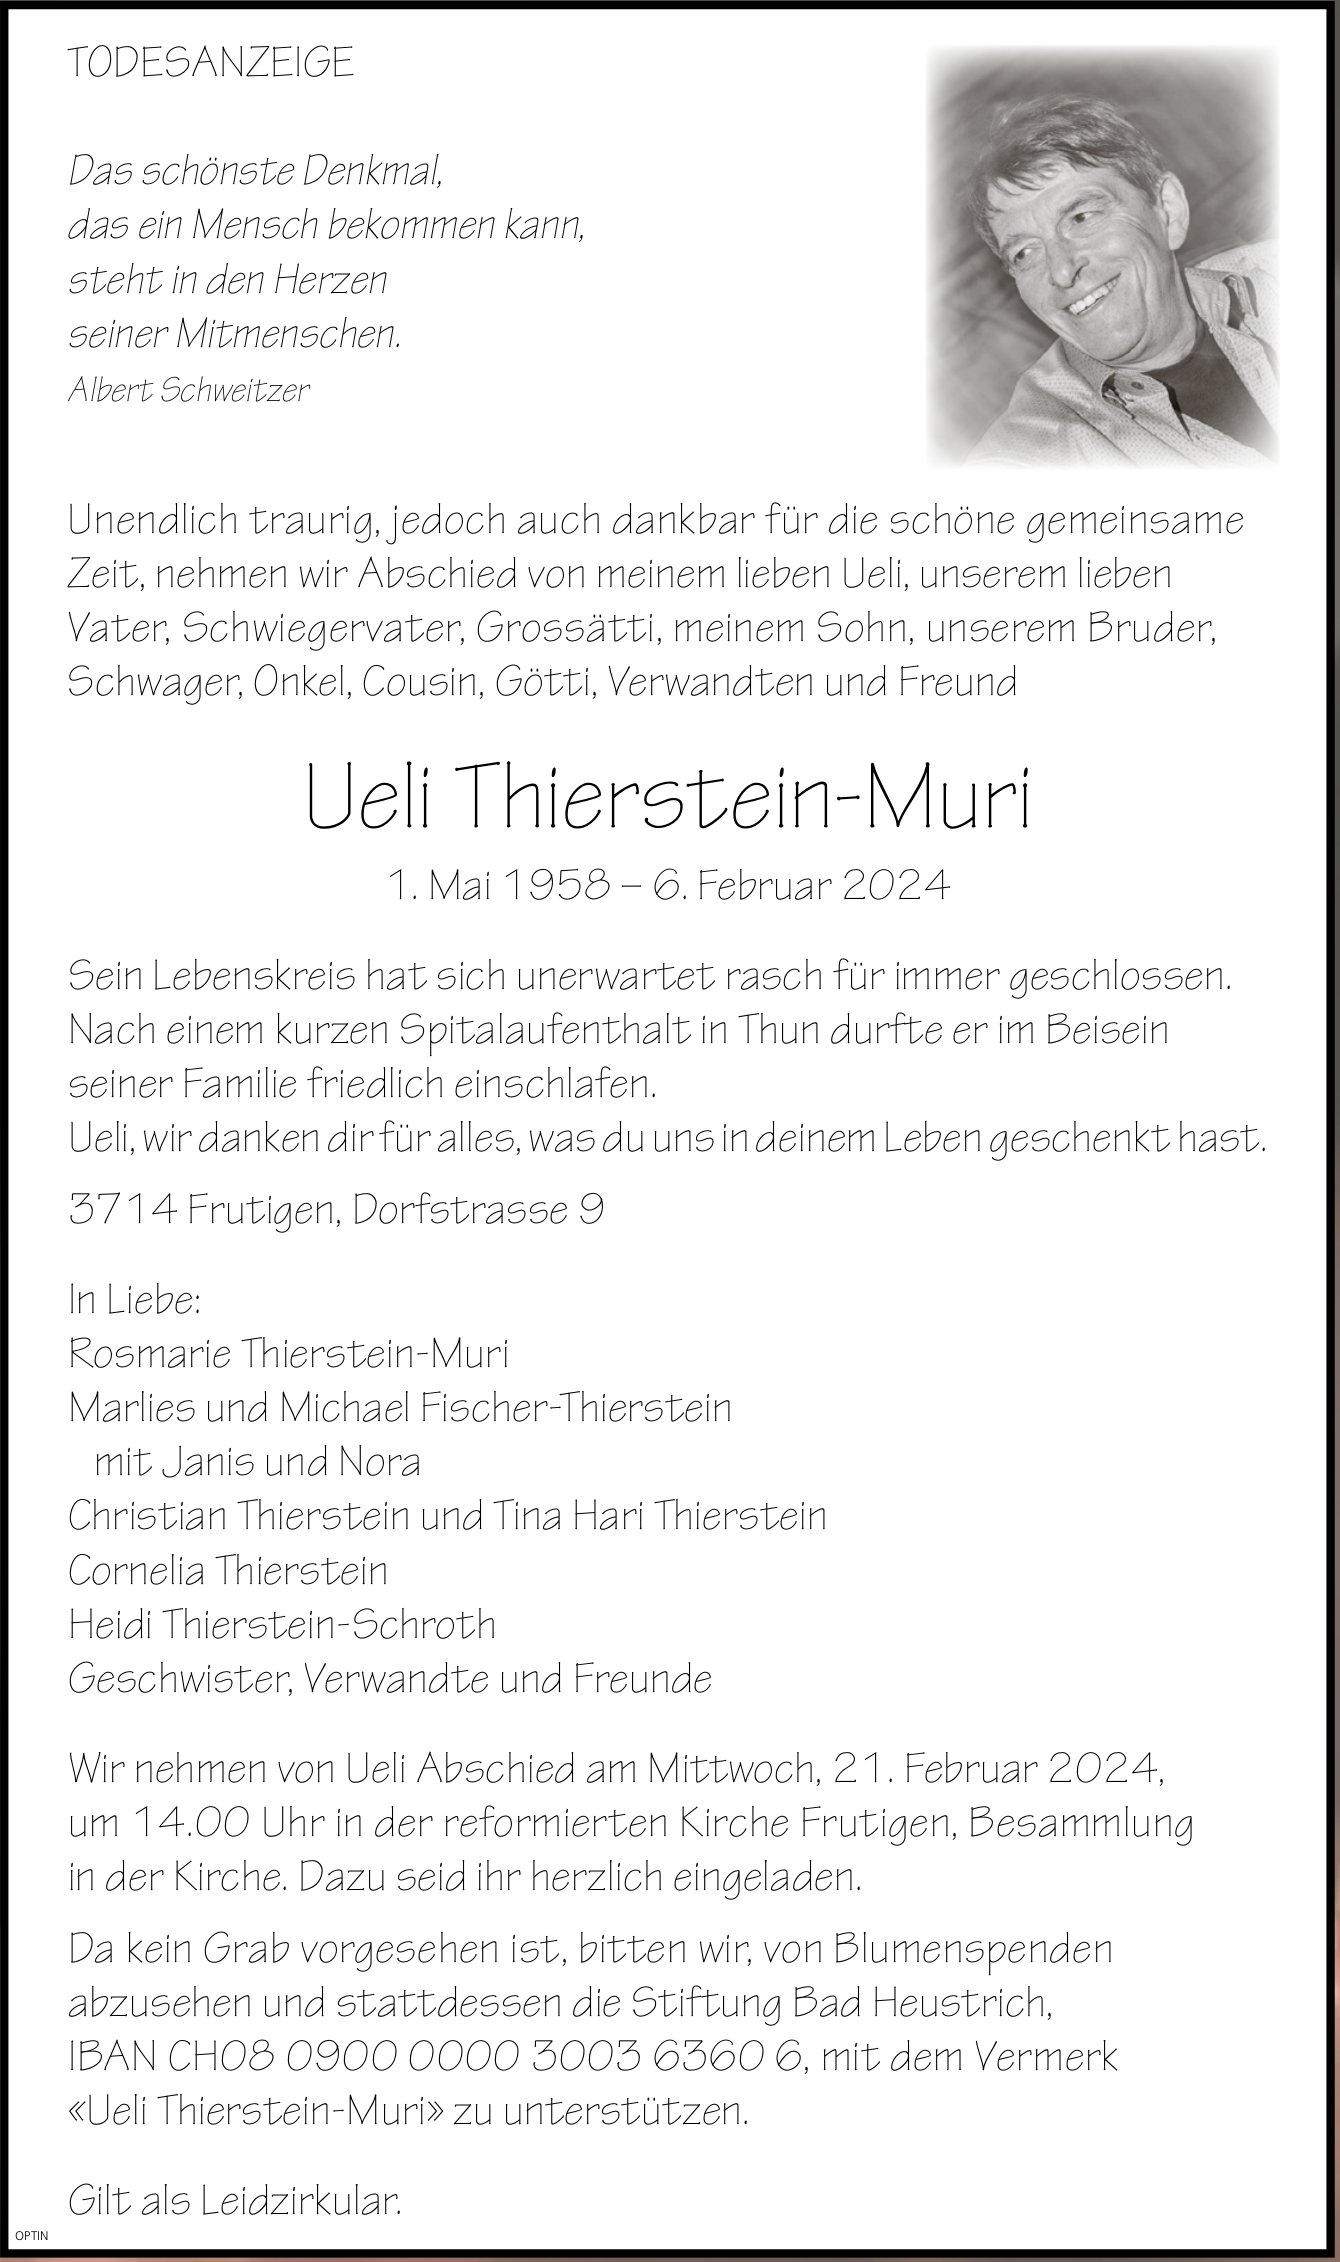 Ueli Thierstein-Muri, Februar 2024 / TA